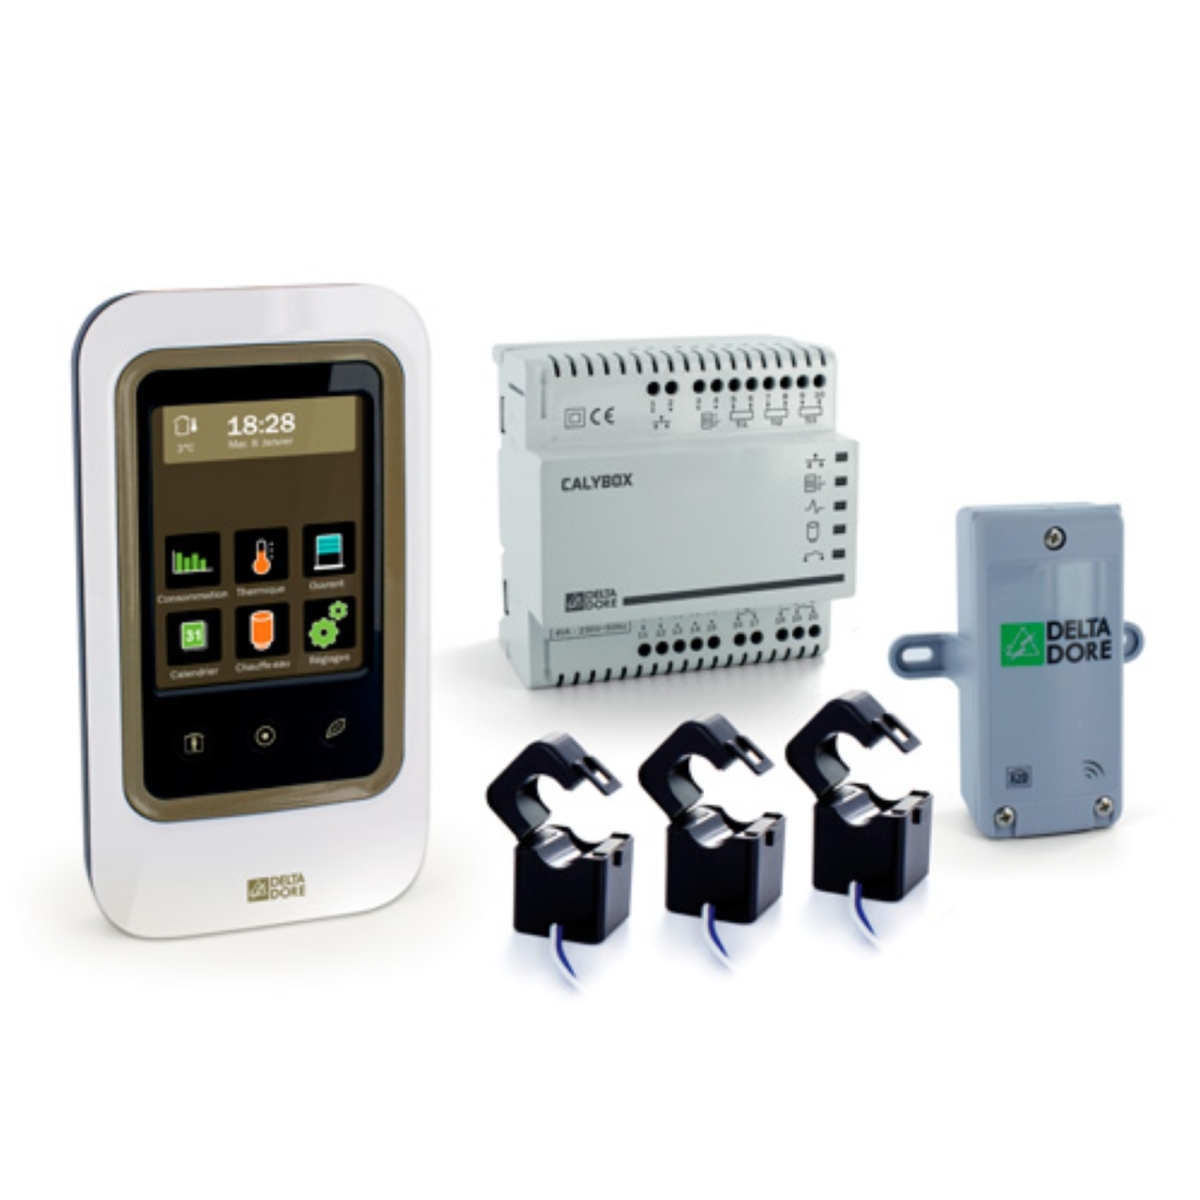 Thermostat Delta Dore Delta Dore   6050600   Calybox 2020 WT Gestionnaire d'energie 4 zones  plus  indication des consommations